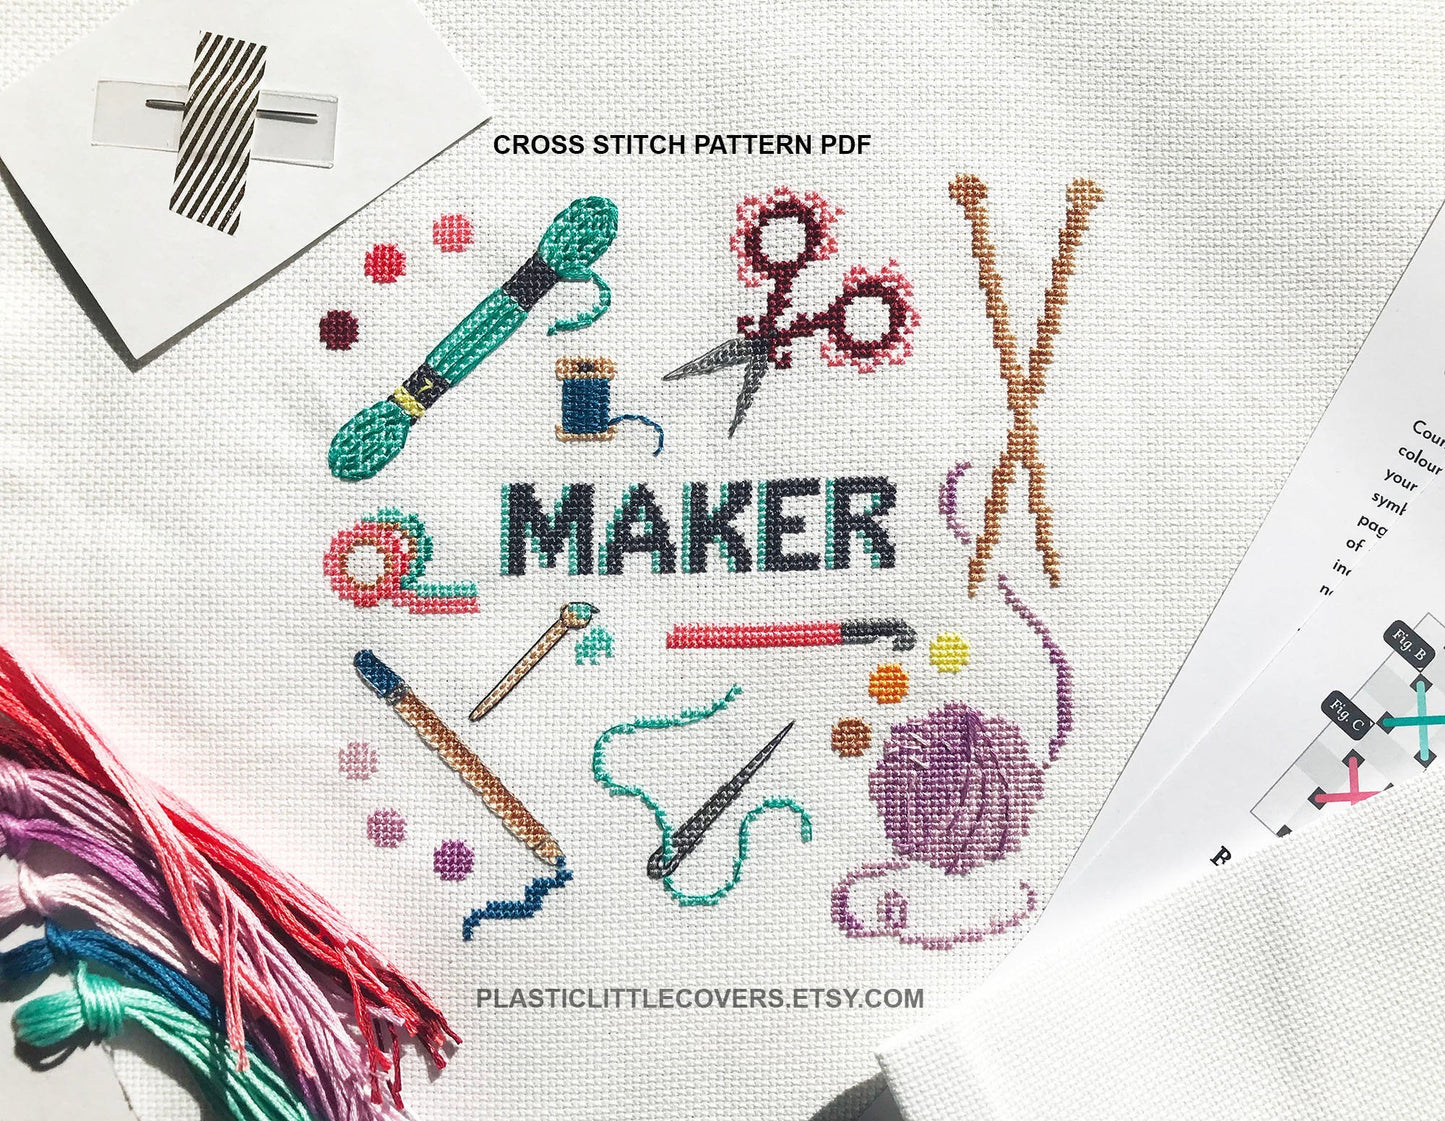 Maker - Cross Stitch Pattern PDF.